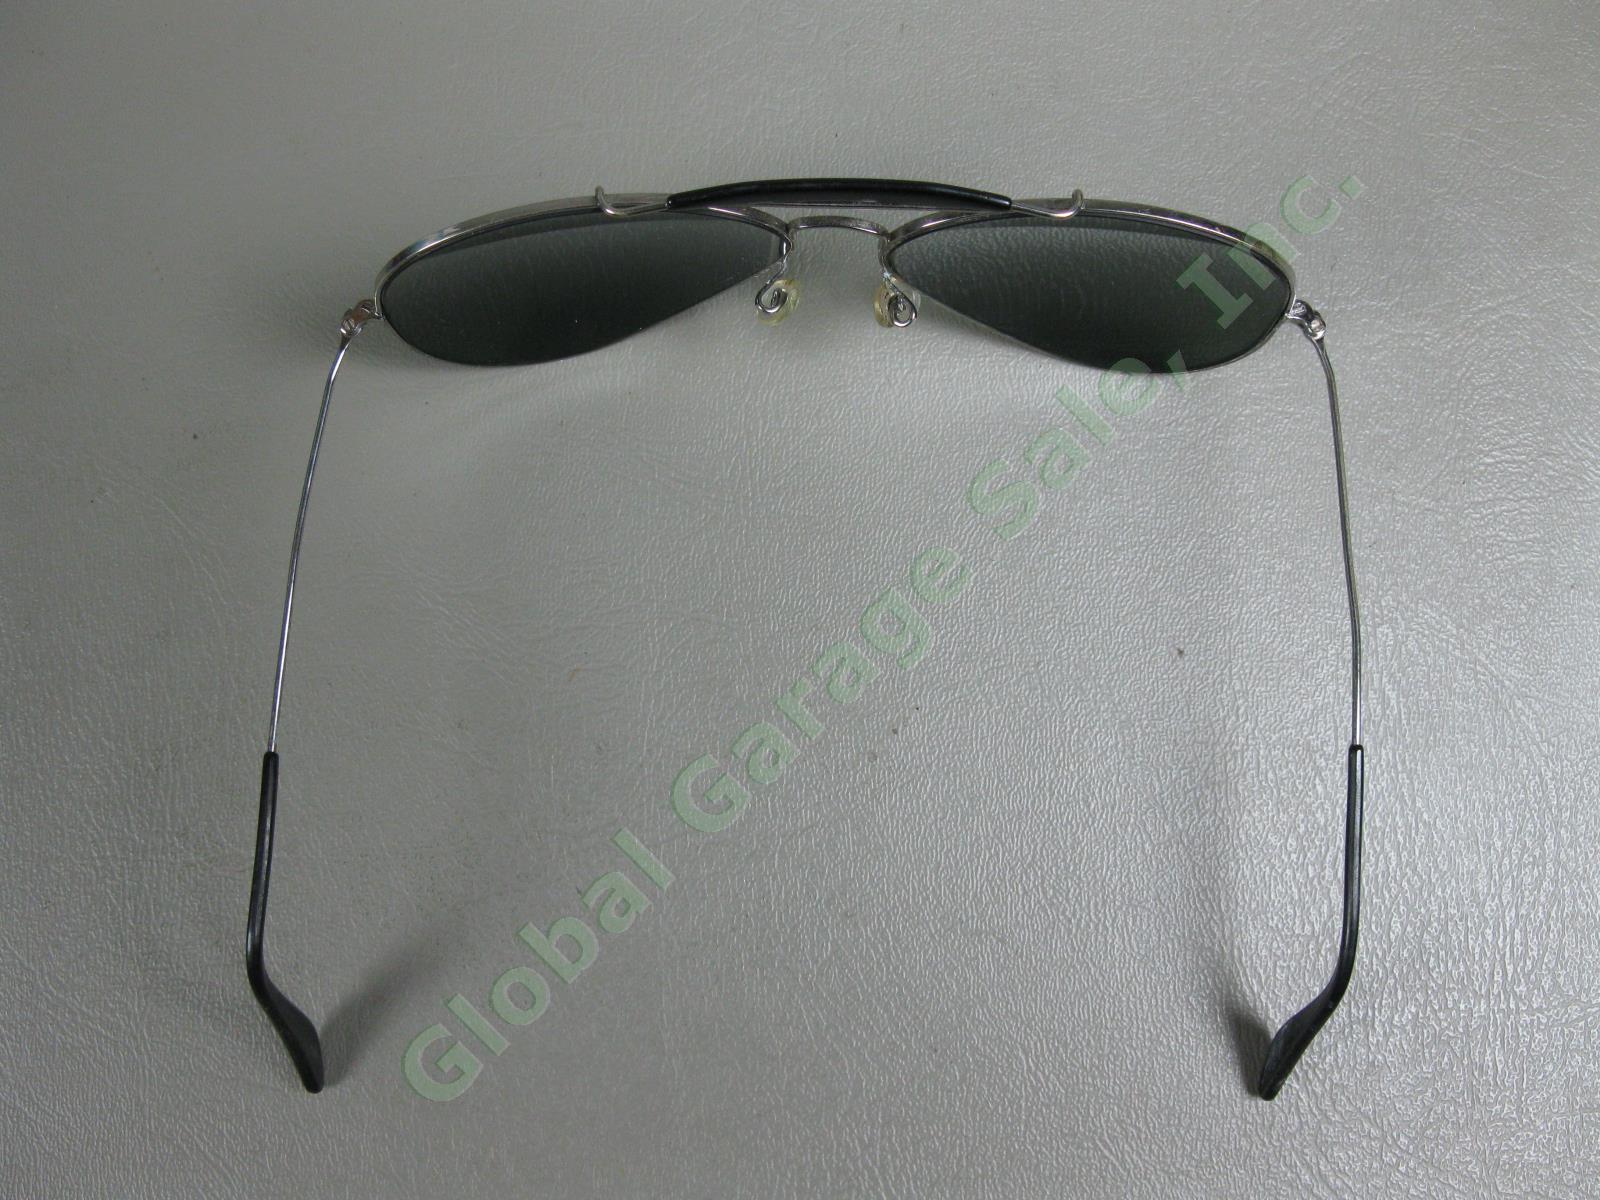 Vtg Bausch + Lomb Ray-Ban Large Aviator Sunglasses 62-14 Green Lenses w/ Case 5